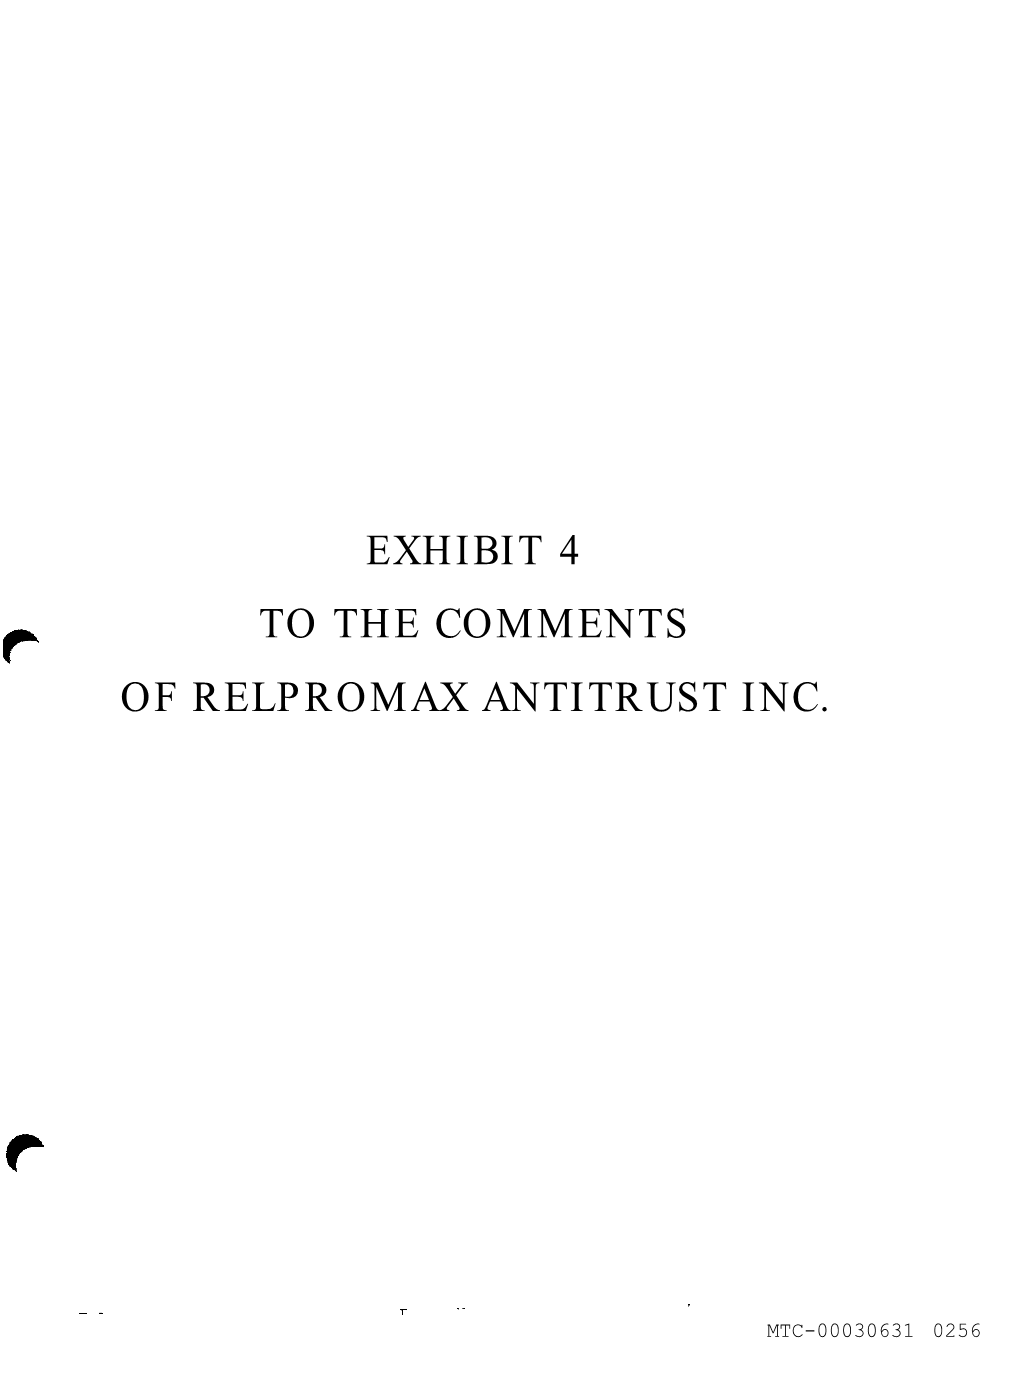 Exhibit 4 to the Comments of Relpromax Antitrust Inc